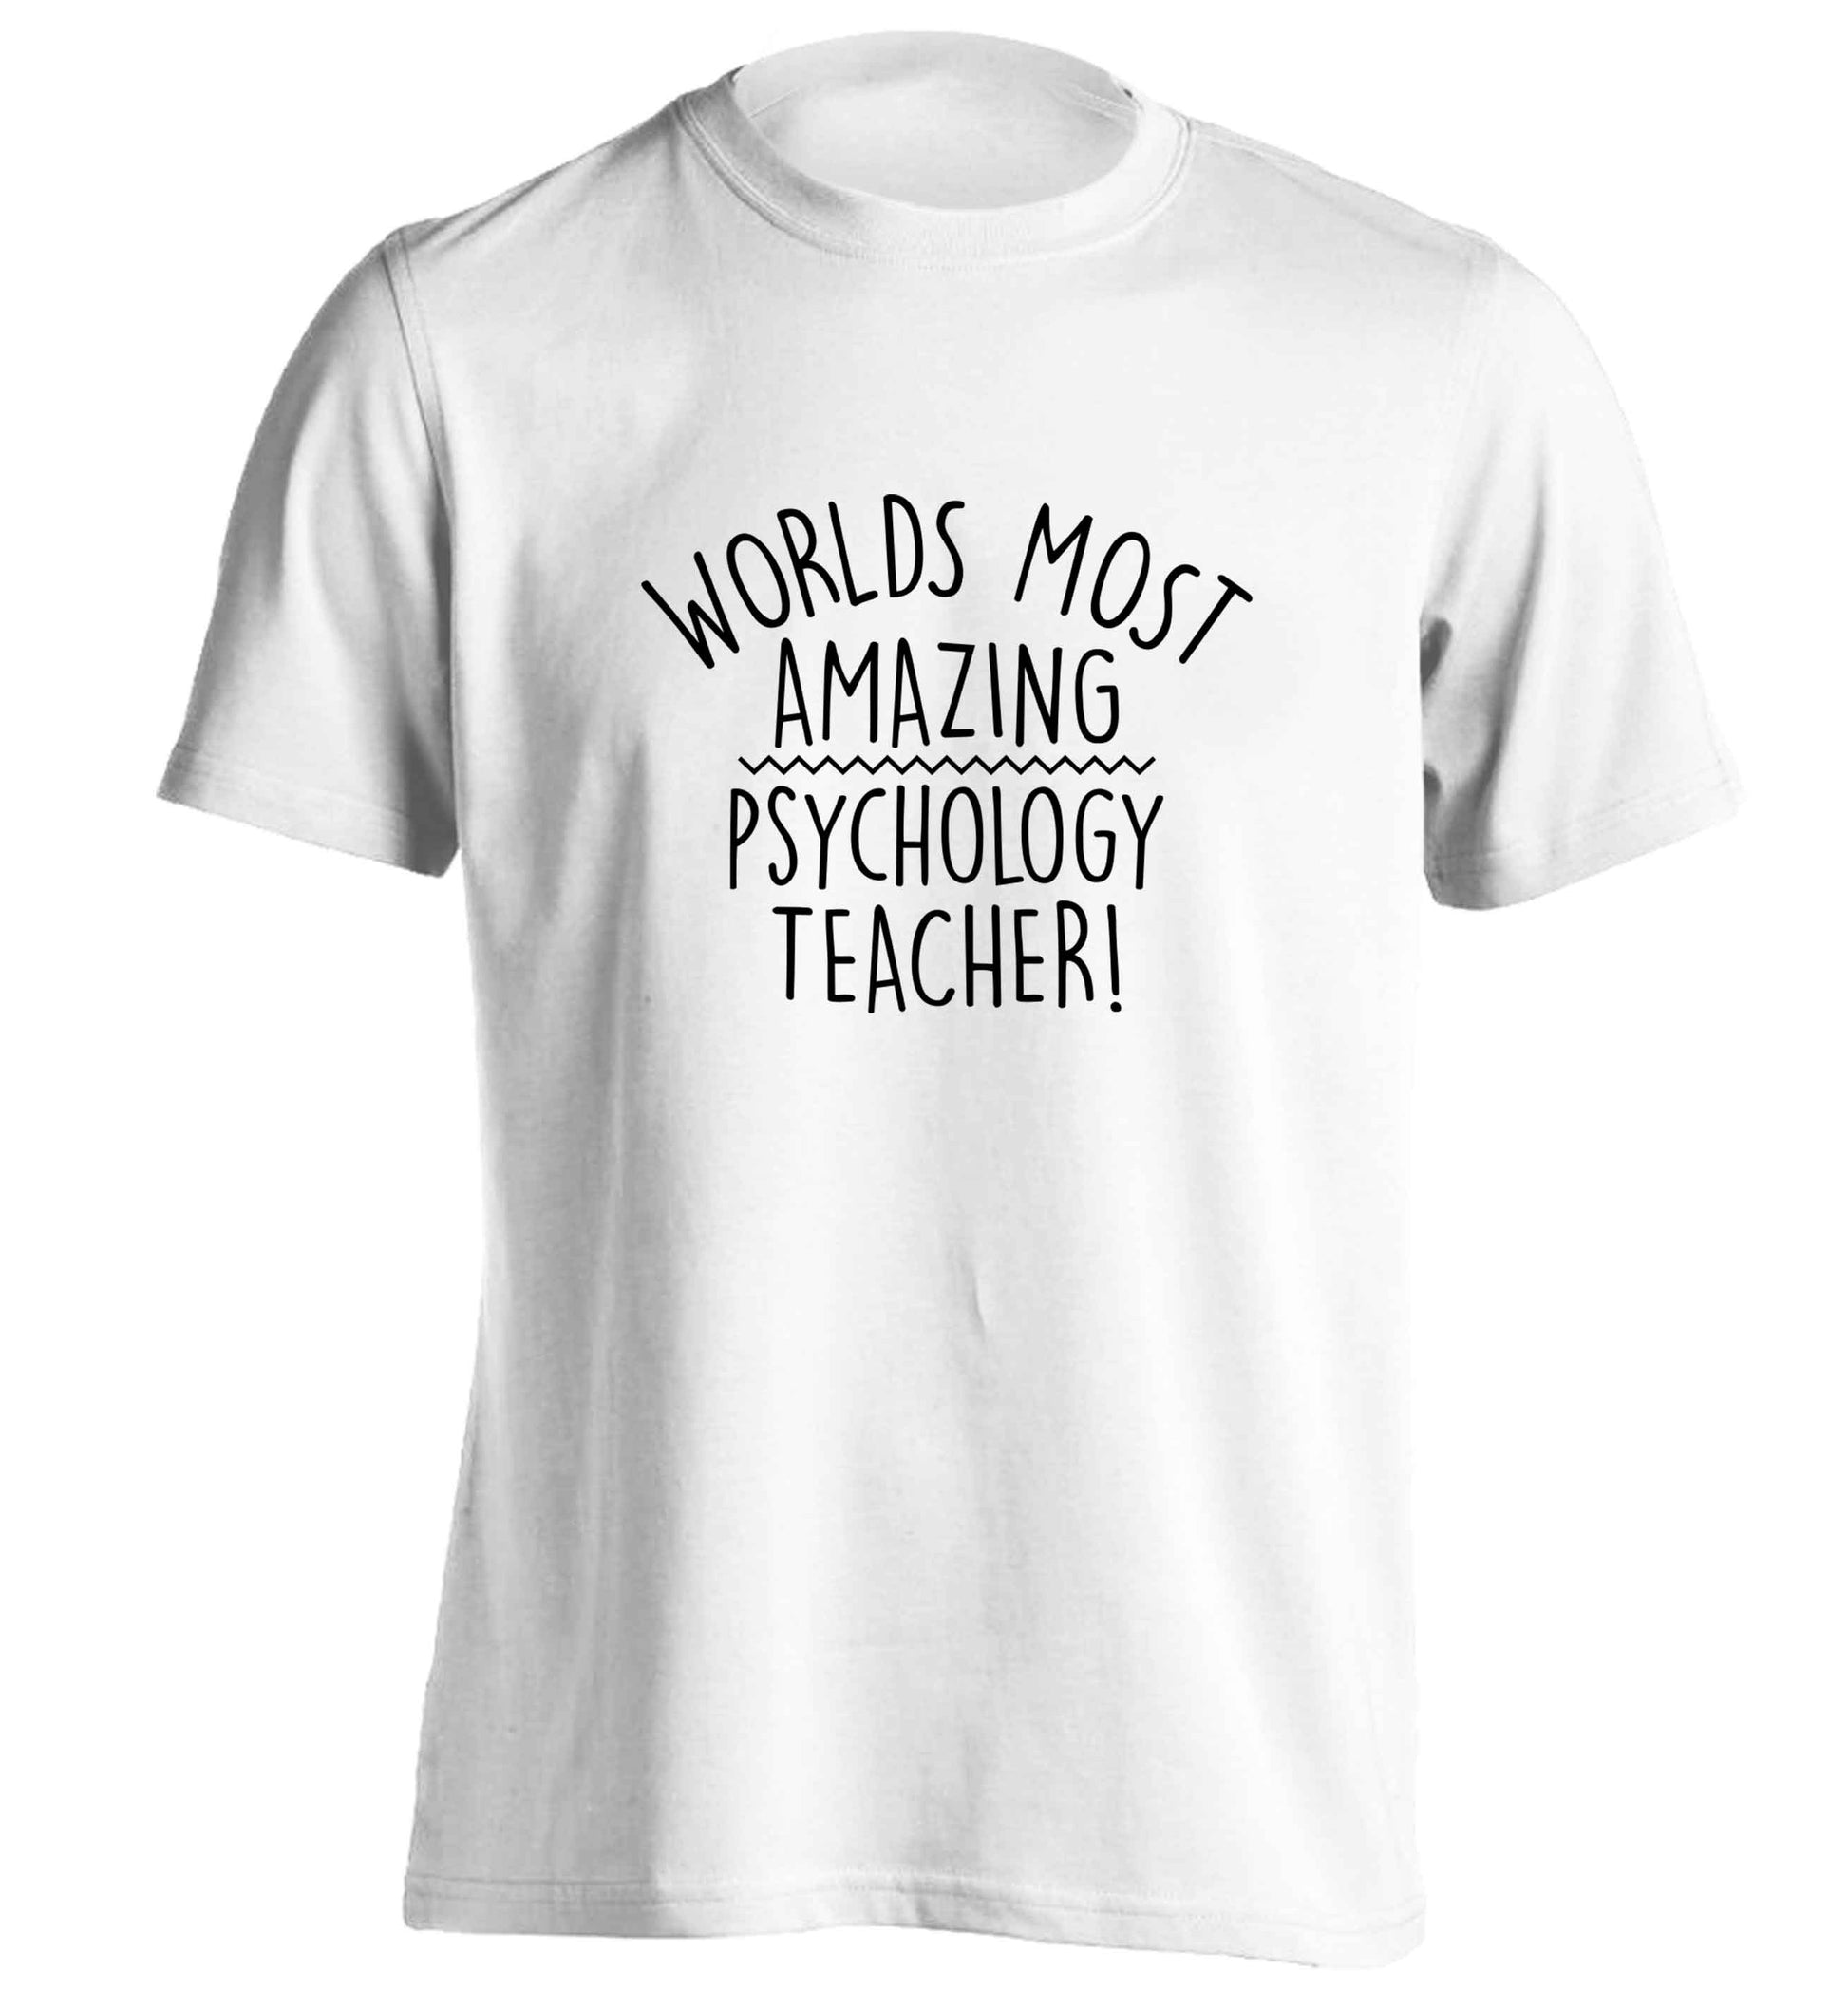 Worlds most amazing psychology teacher adults unisex white Tshirt 2XL